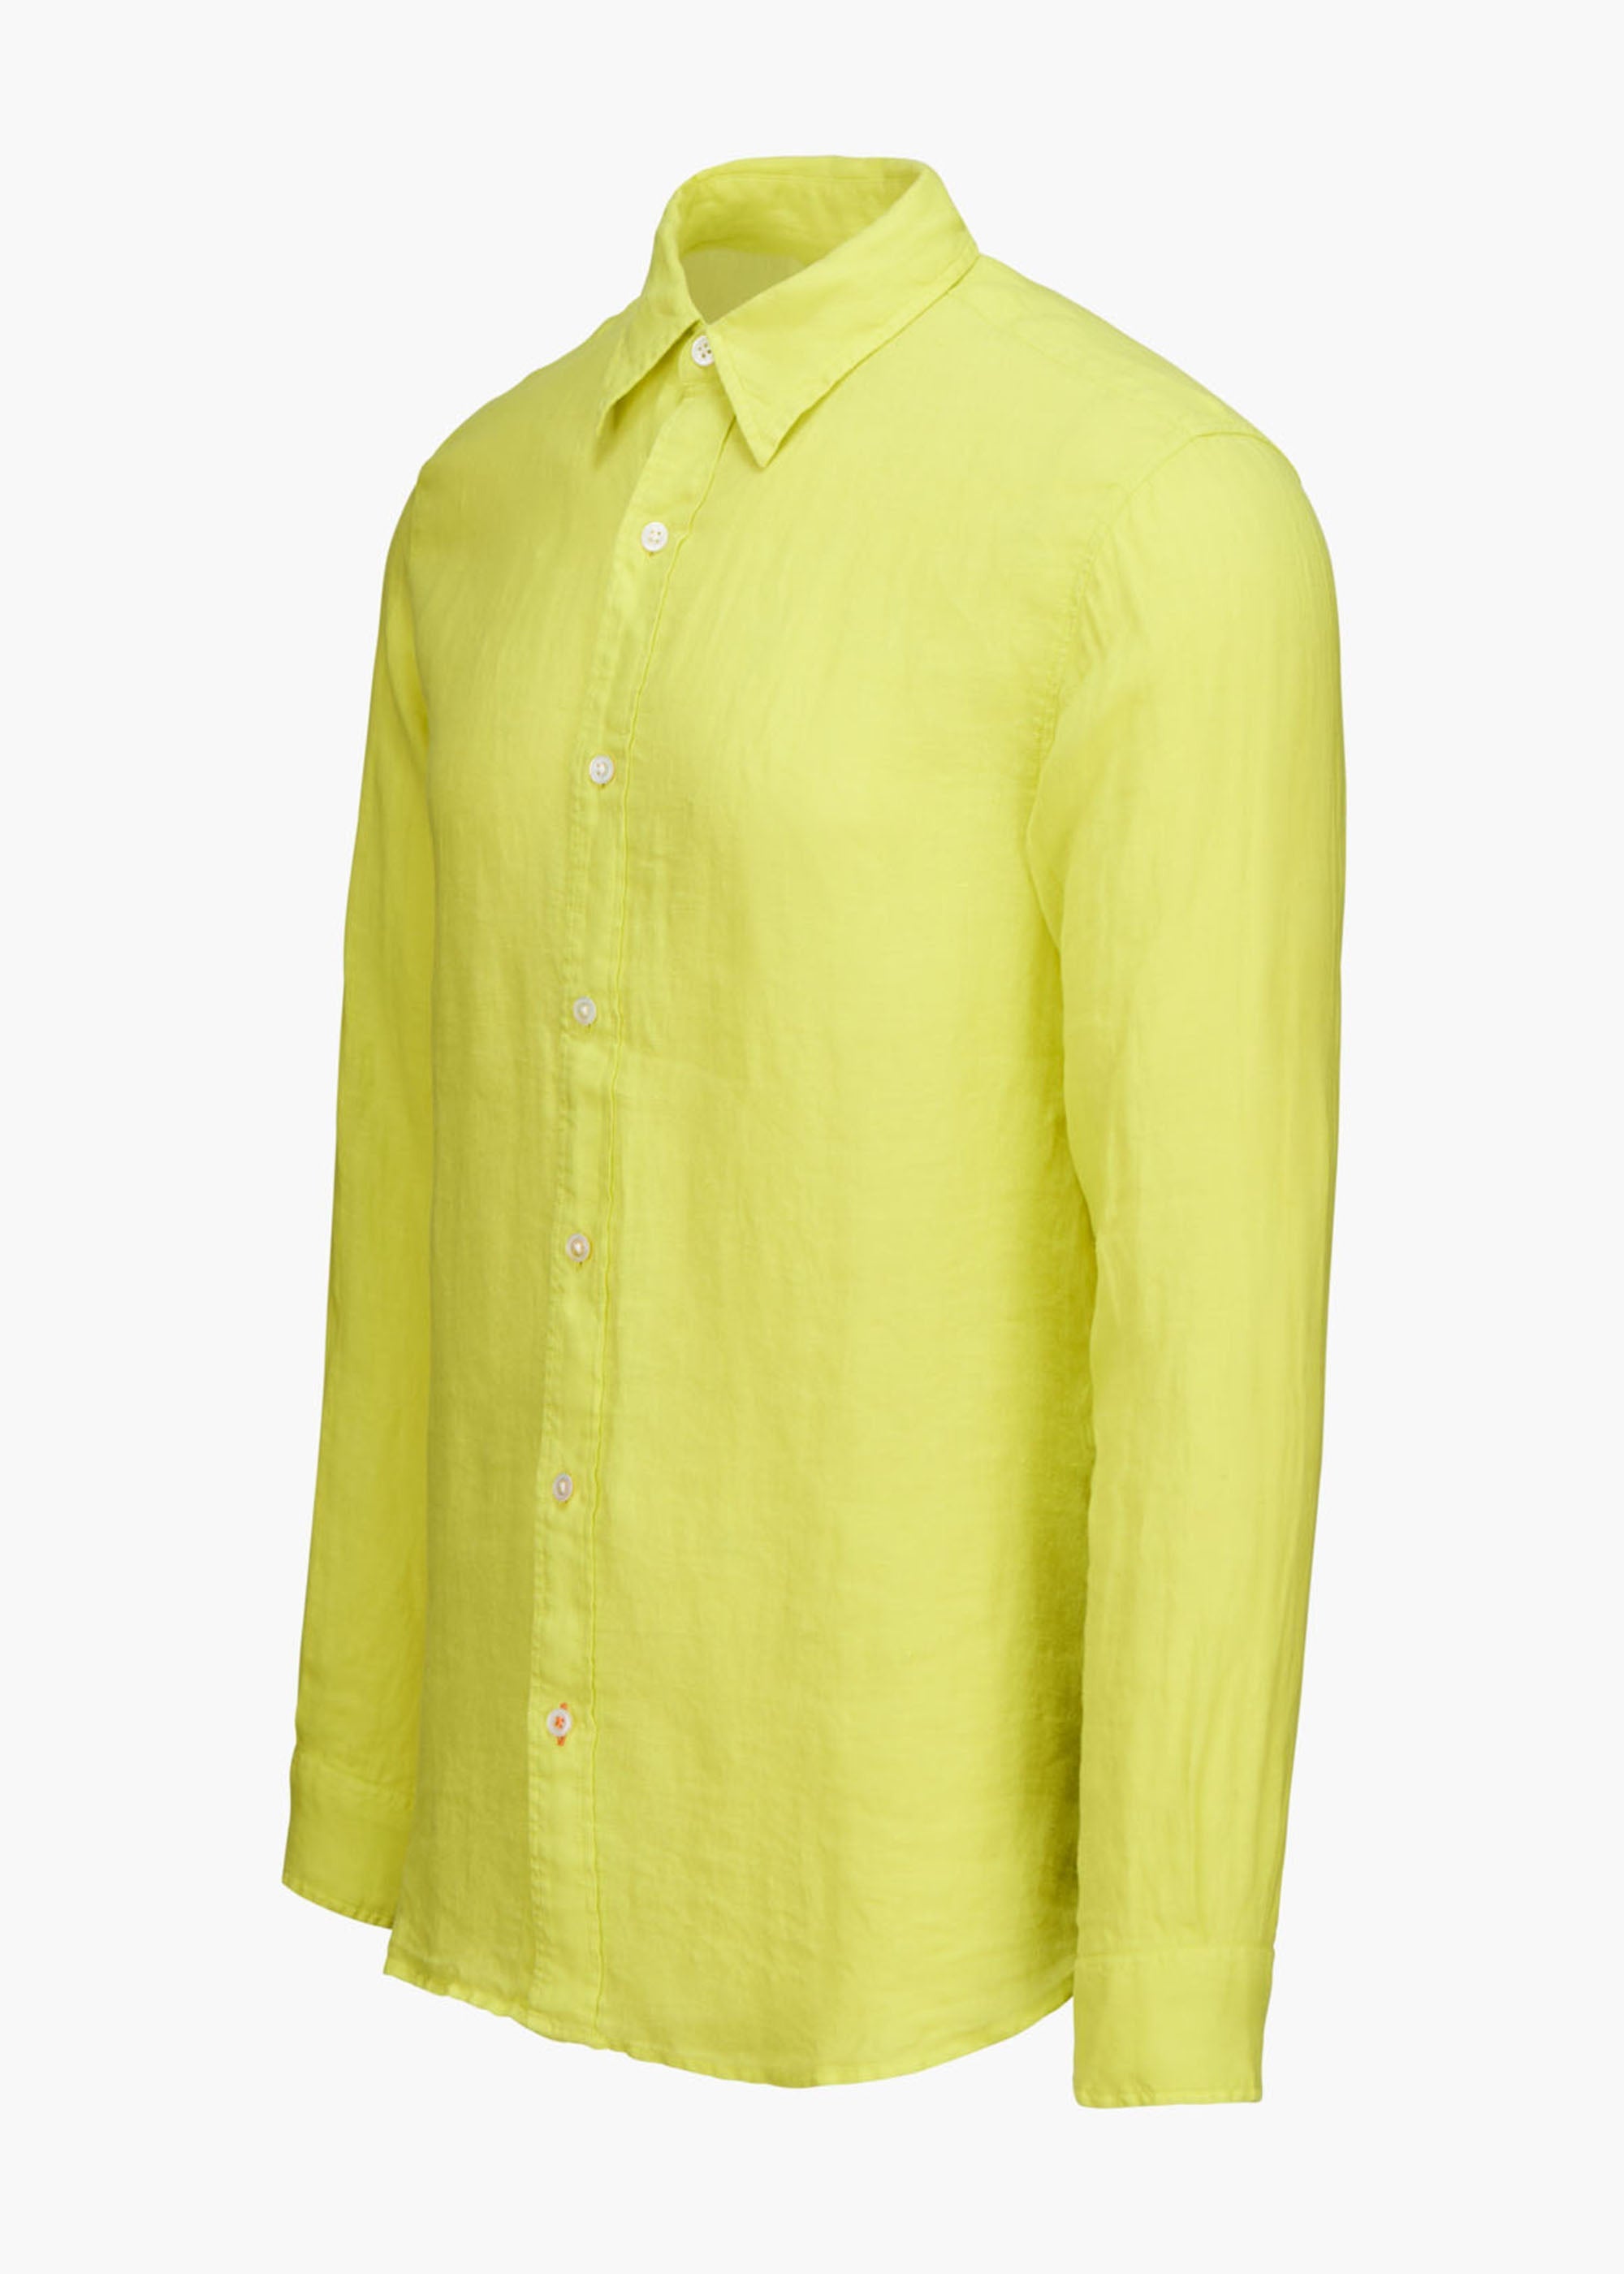 Amalfi Linen Shirt - background::white,variant::Citron